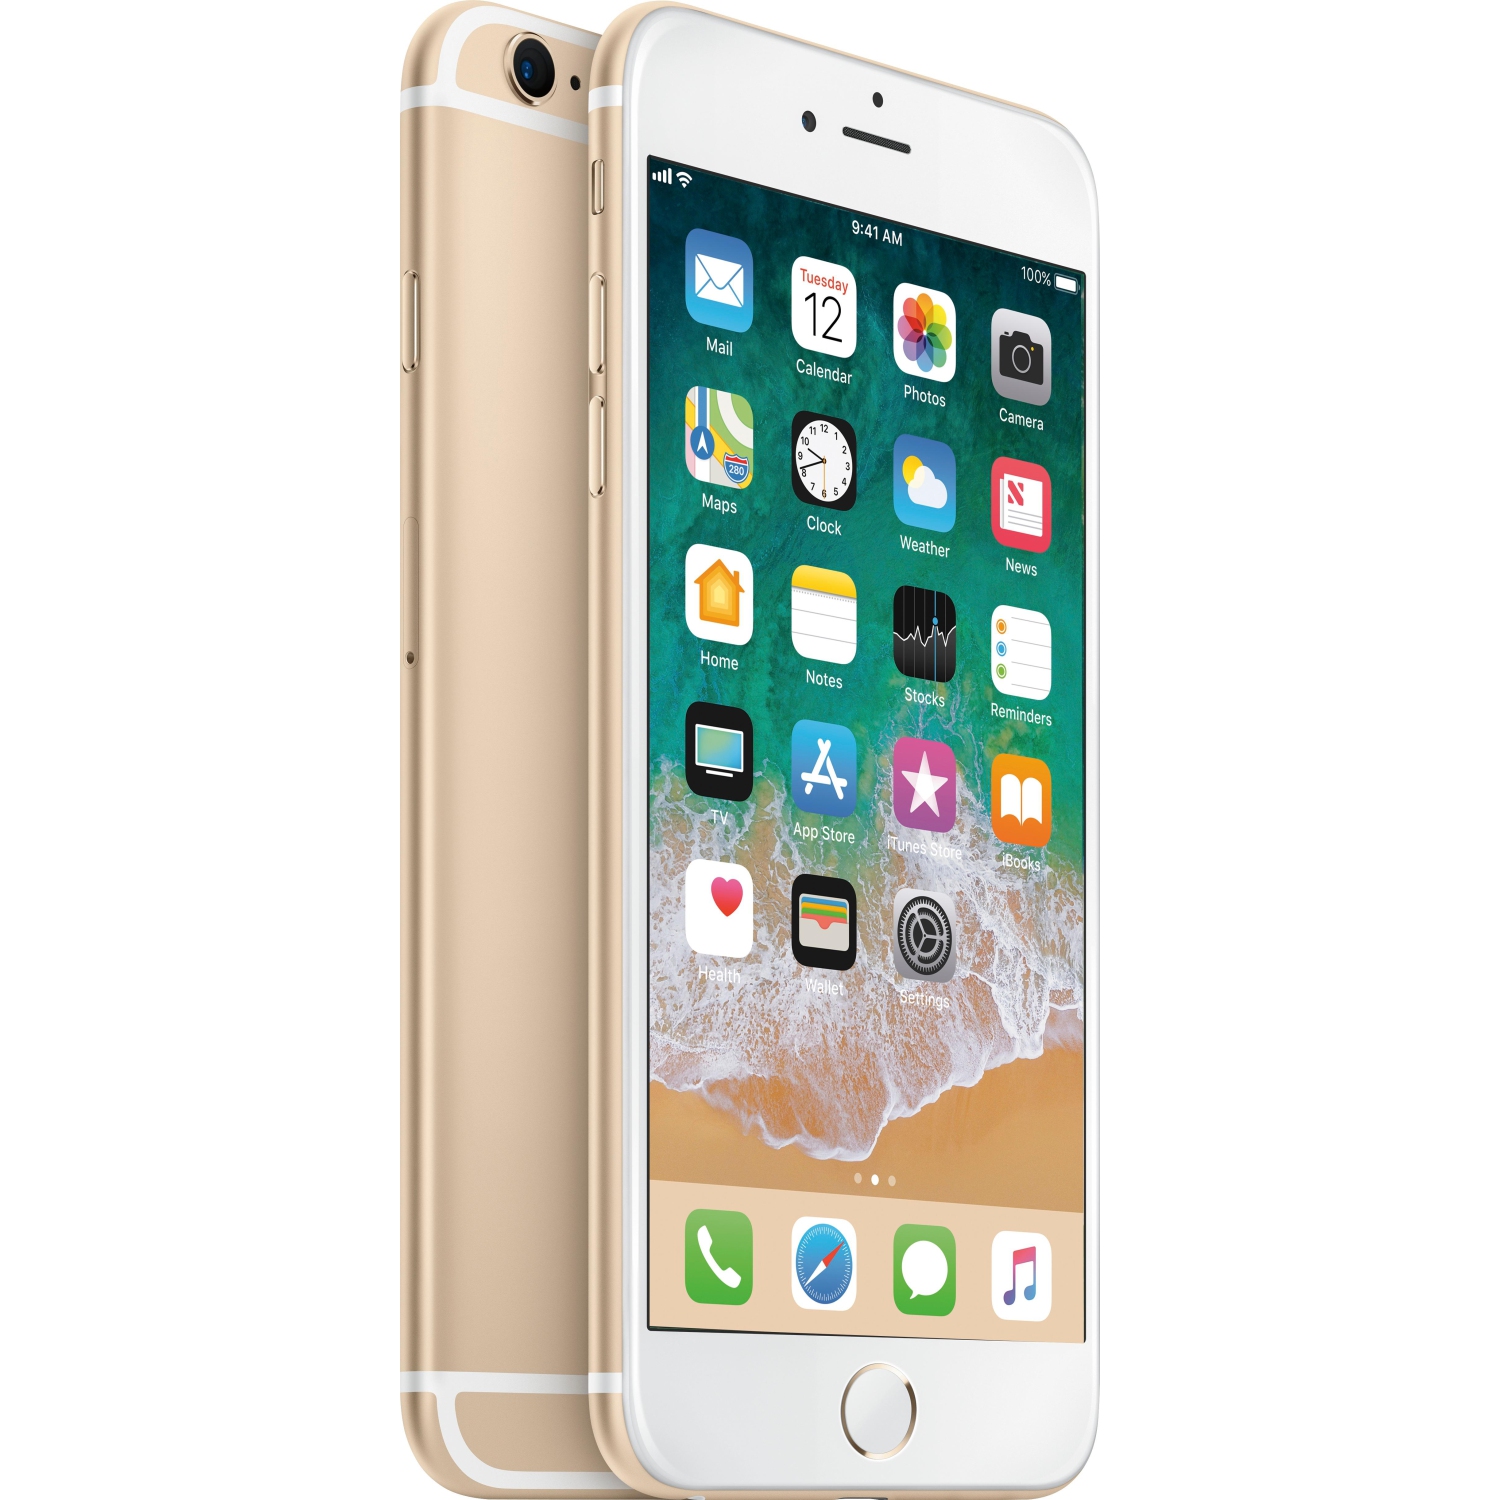 Apple iPhone 6s Plus 64GB Smartphone - Gold - Unlocked - Open Box